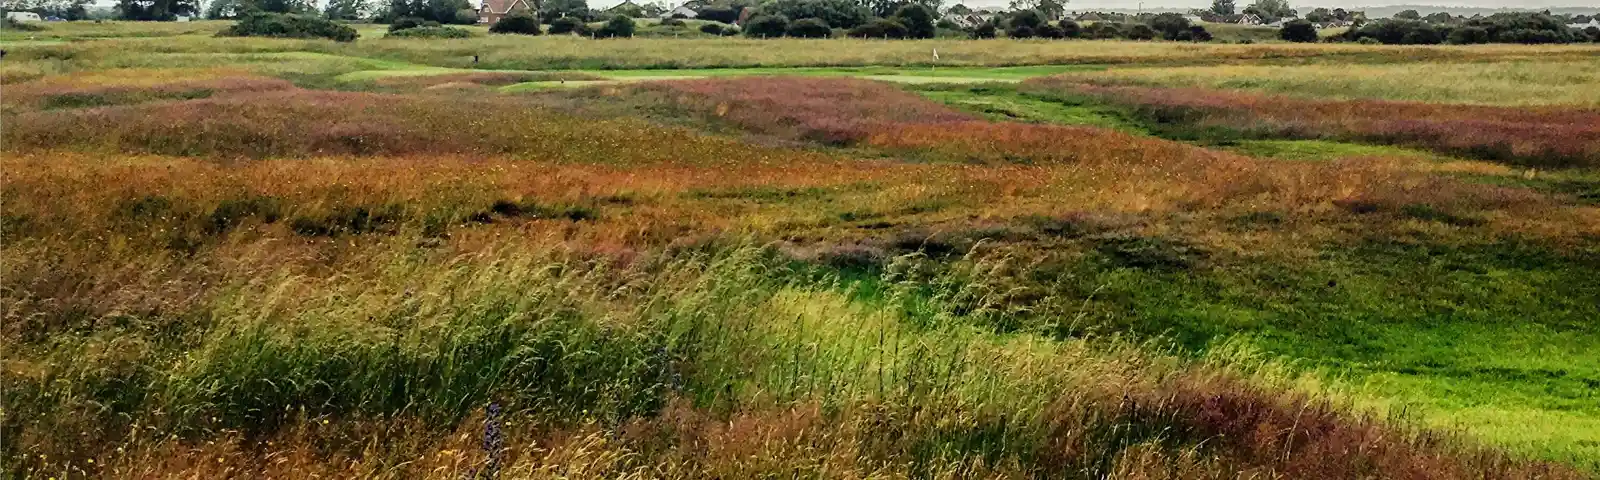 Littlestone Golf Course near Romney Marsh.jpg